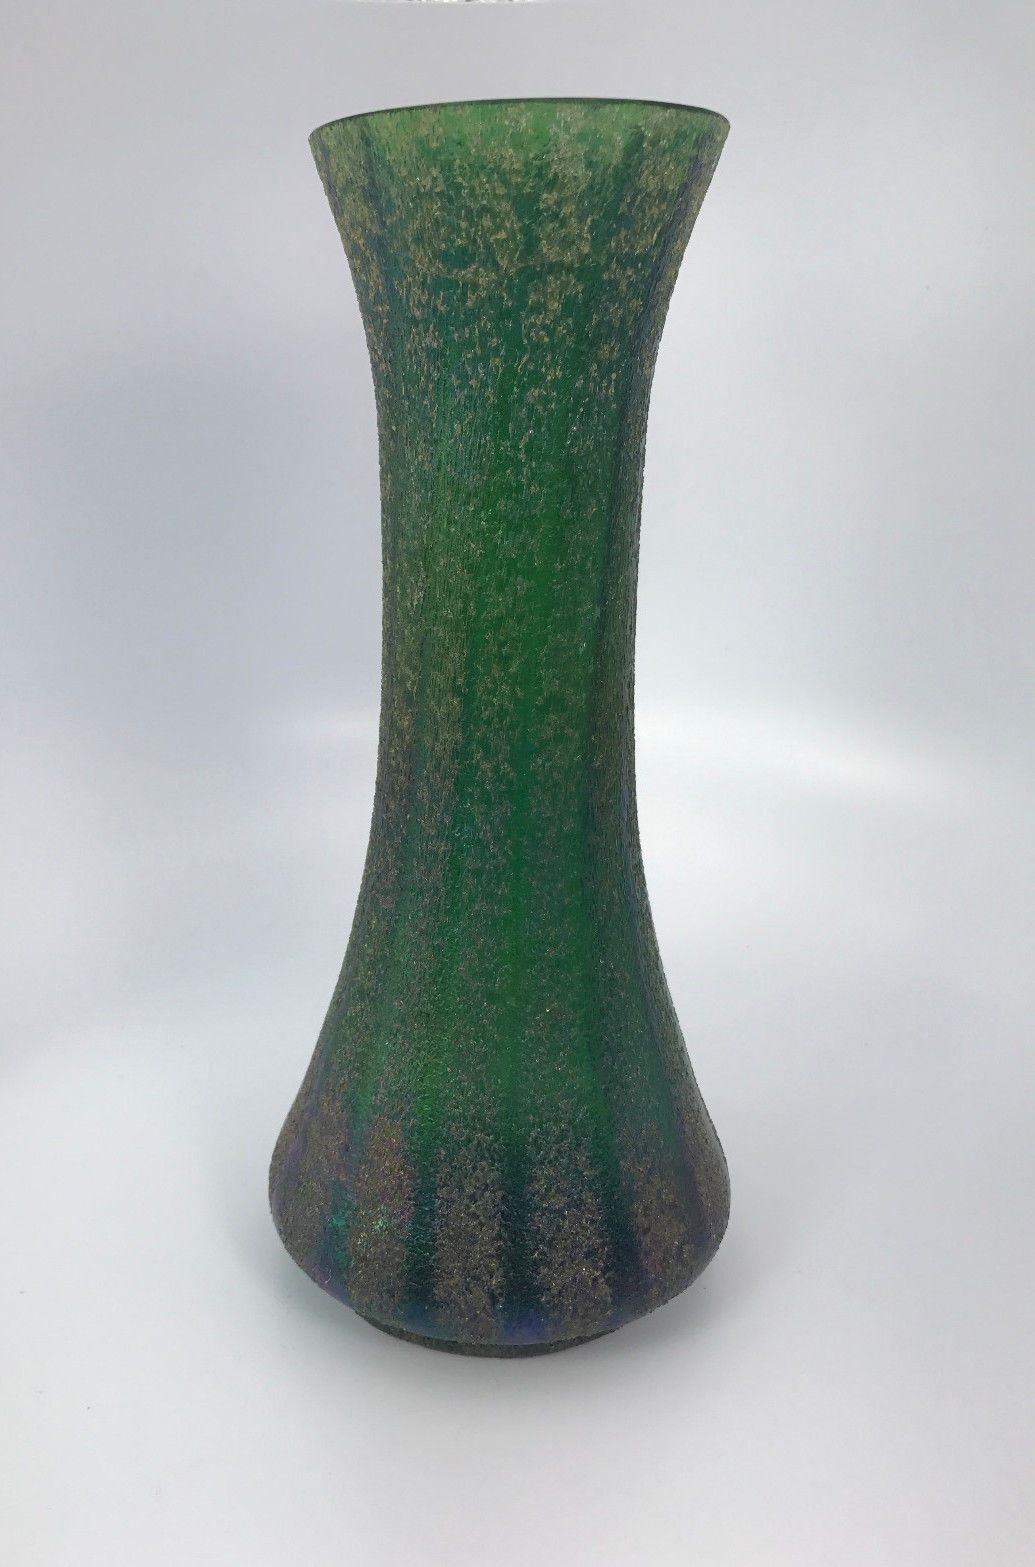 15 Spectacular Tiffany Style Vase 2024 free download tiffany style vase of kralik green overshot vase loetz era vase overshot frit pinterest intended for a very nice green kralik overshot vase 3 5 across base 4 5 across widest width cut rim an